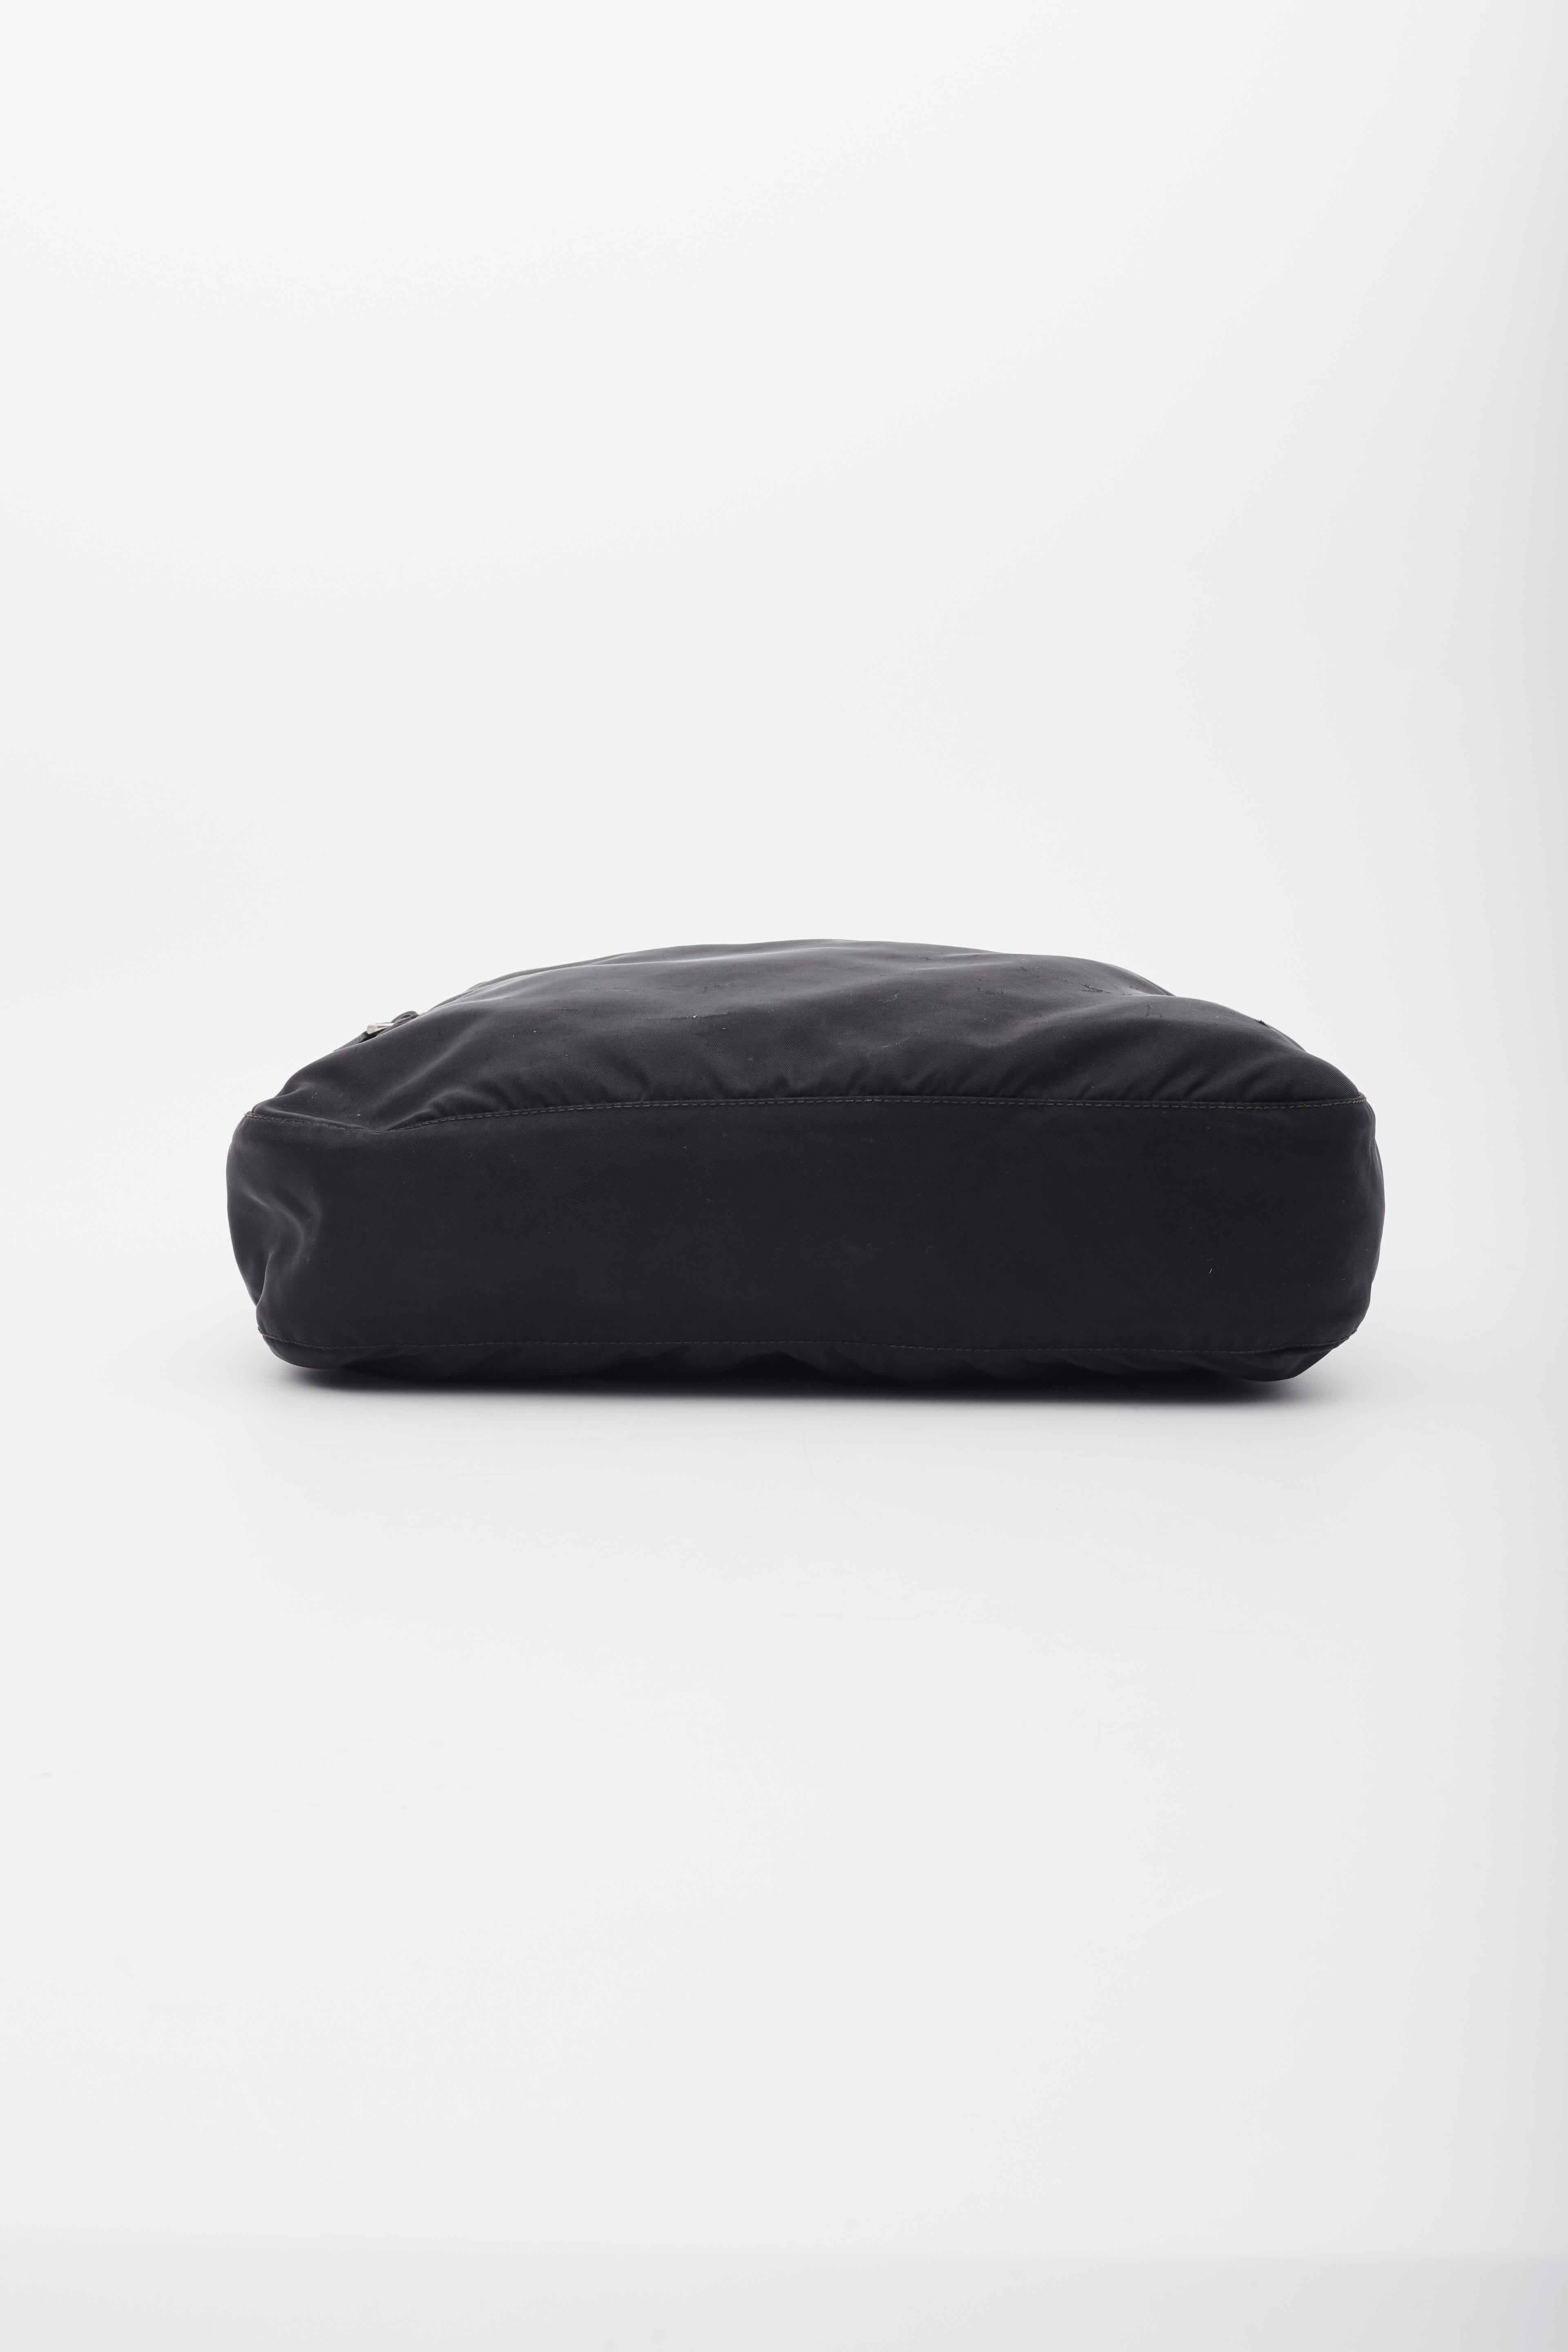 Prada Black Nylon Messenger Bag In Good Condition For Sale In Montreal, Quebec